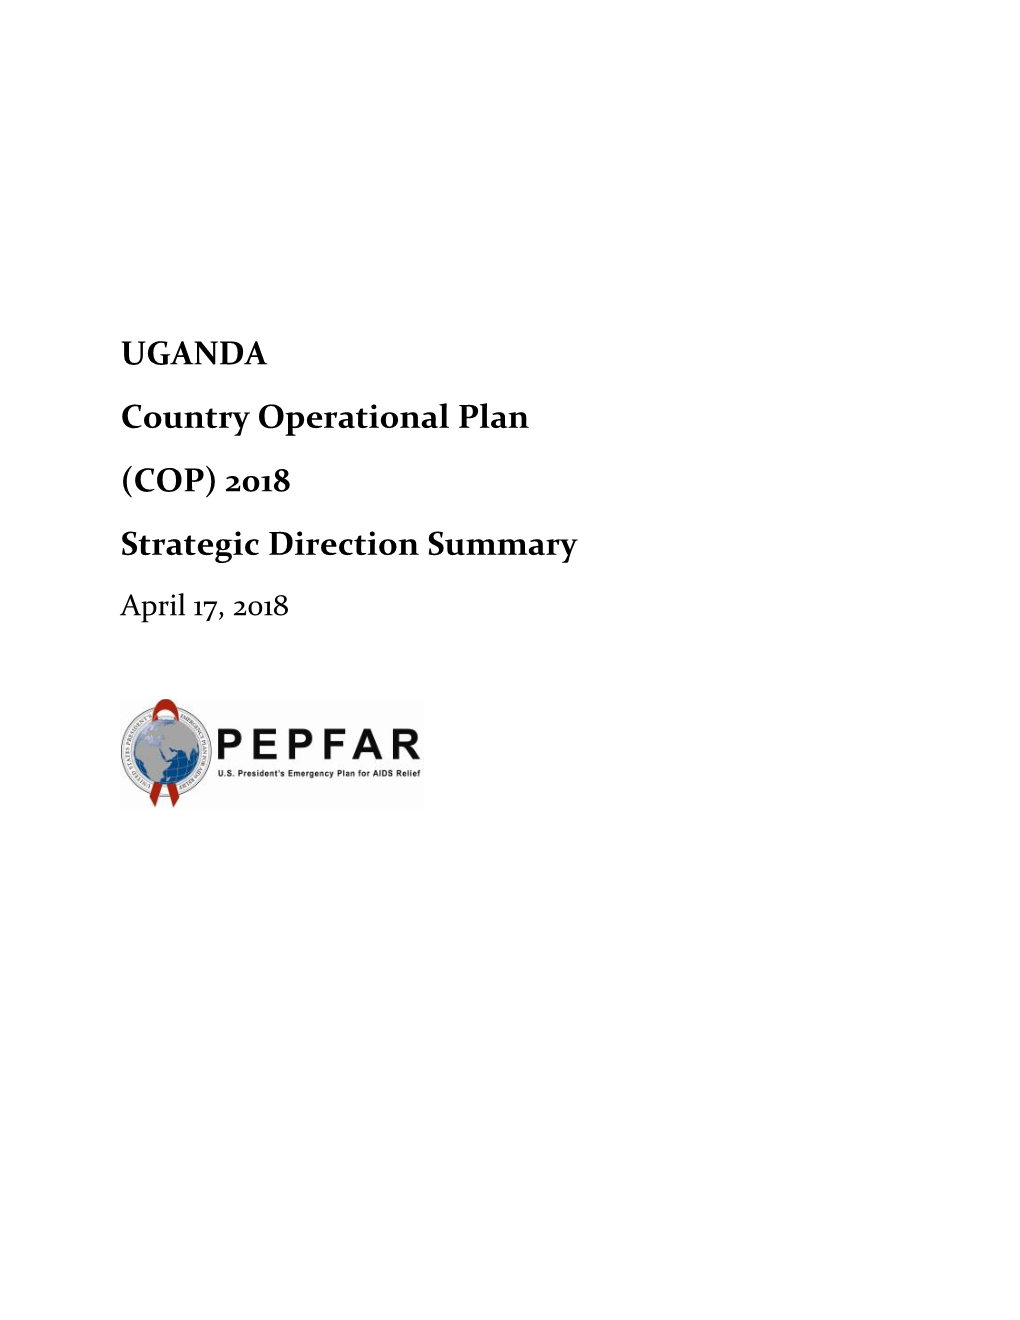 Uganda Country Operational Plan 2018 Strategic Direction Summary